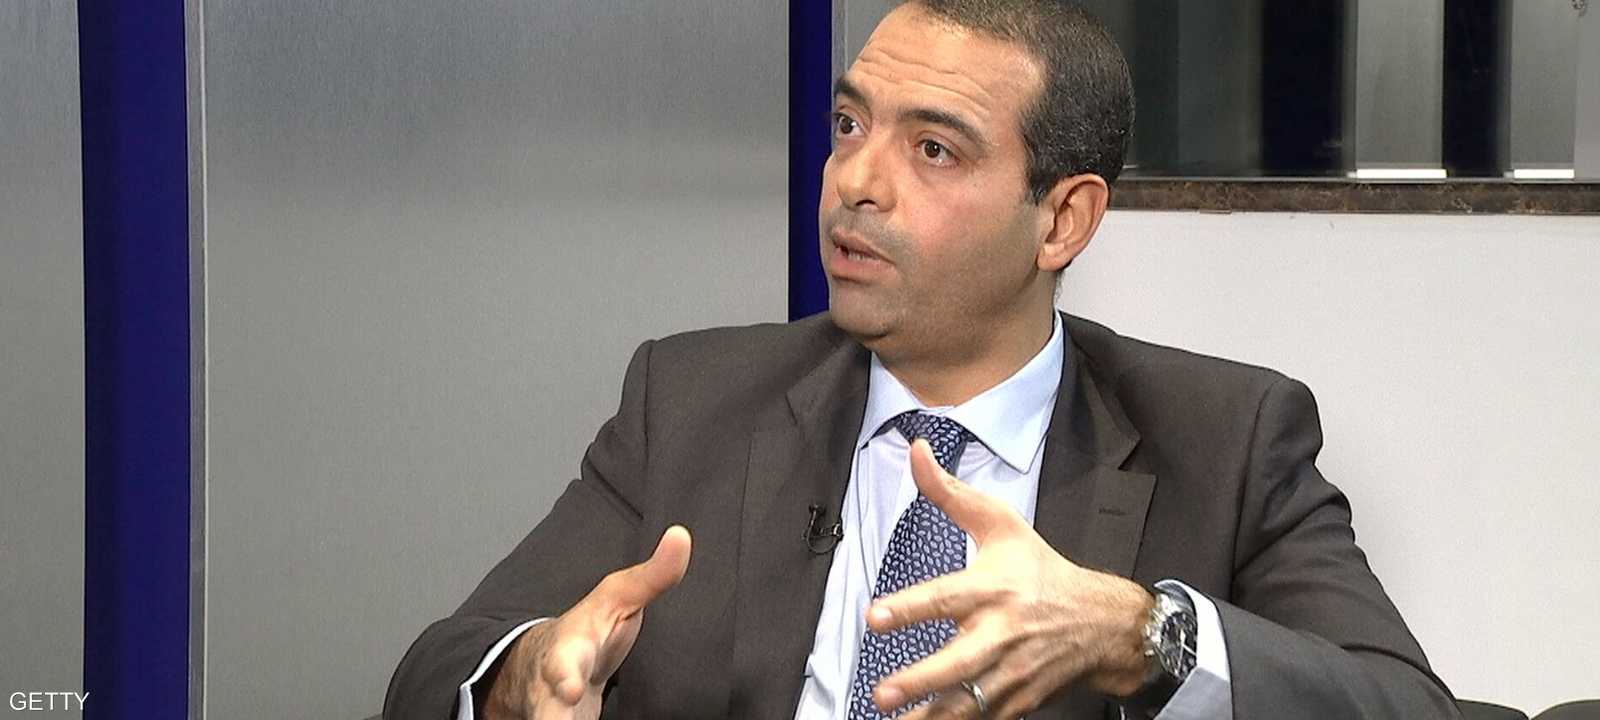 أيمن سليمان رئيس صندوق مصر السيادي